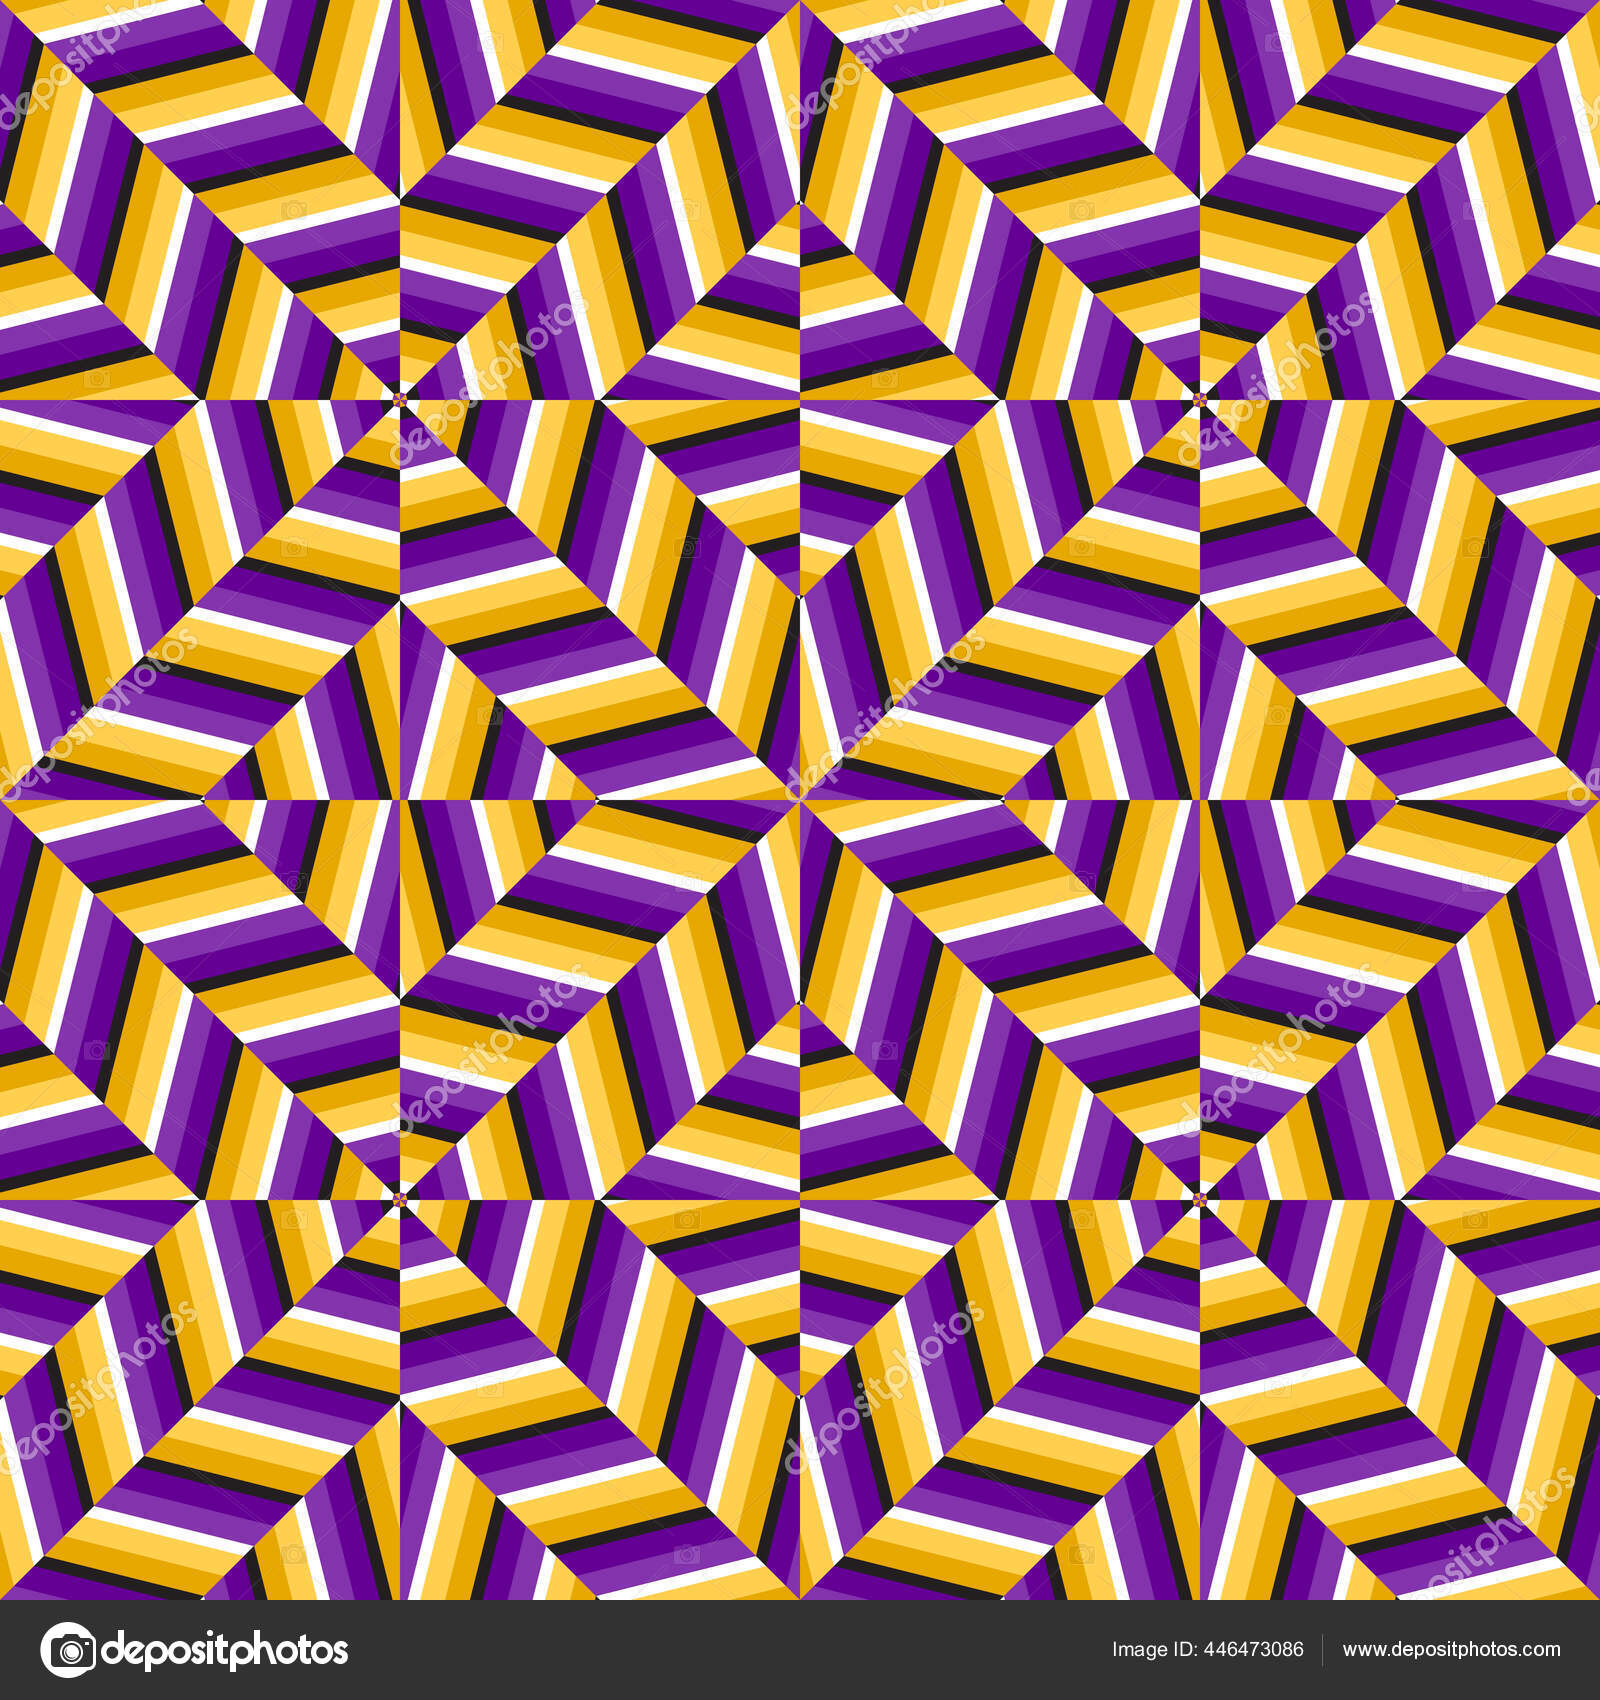 moving optical illusions wallpaper